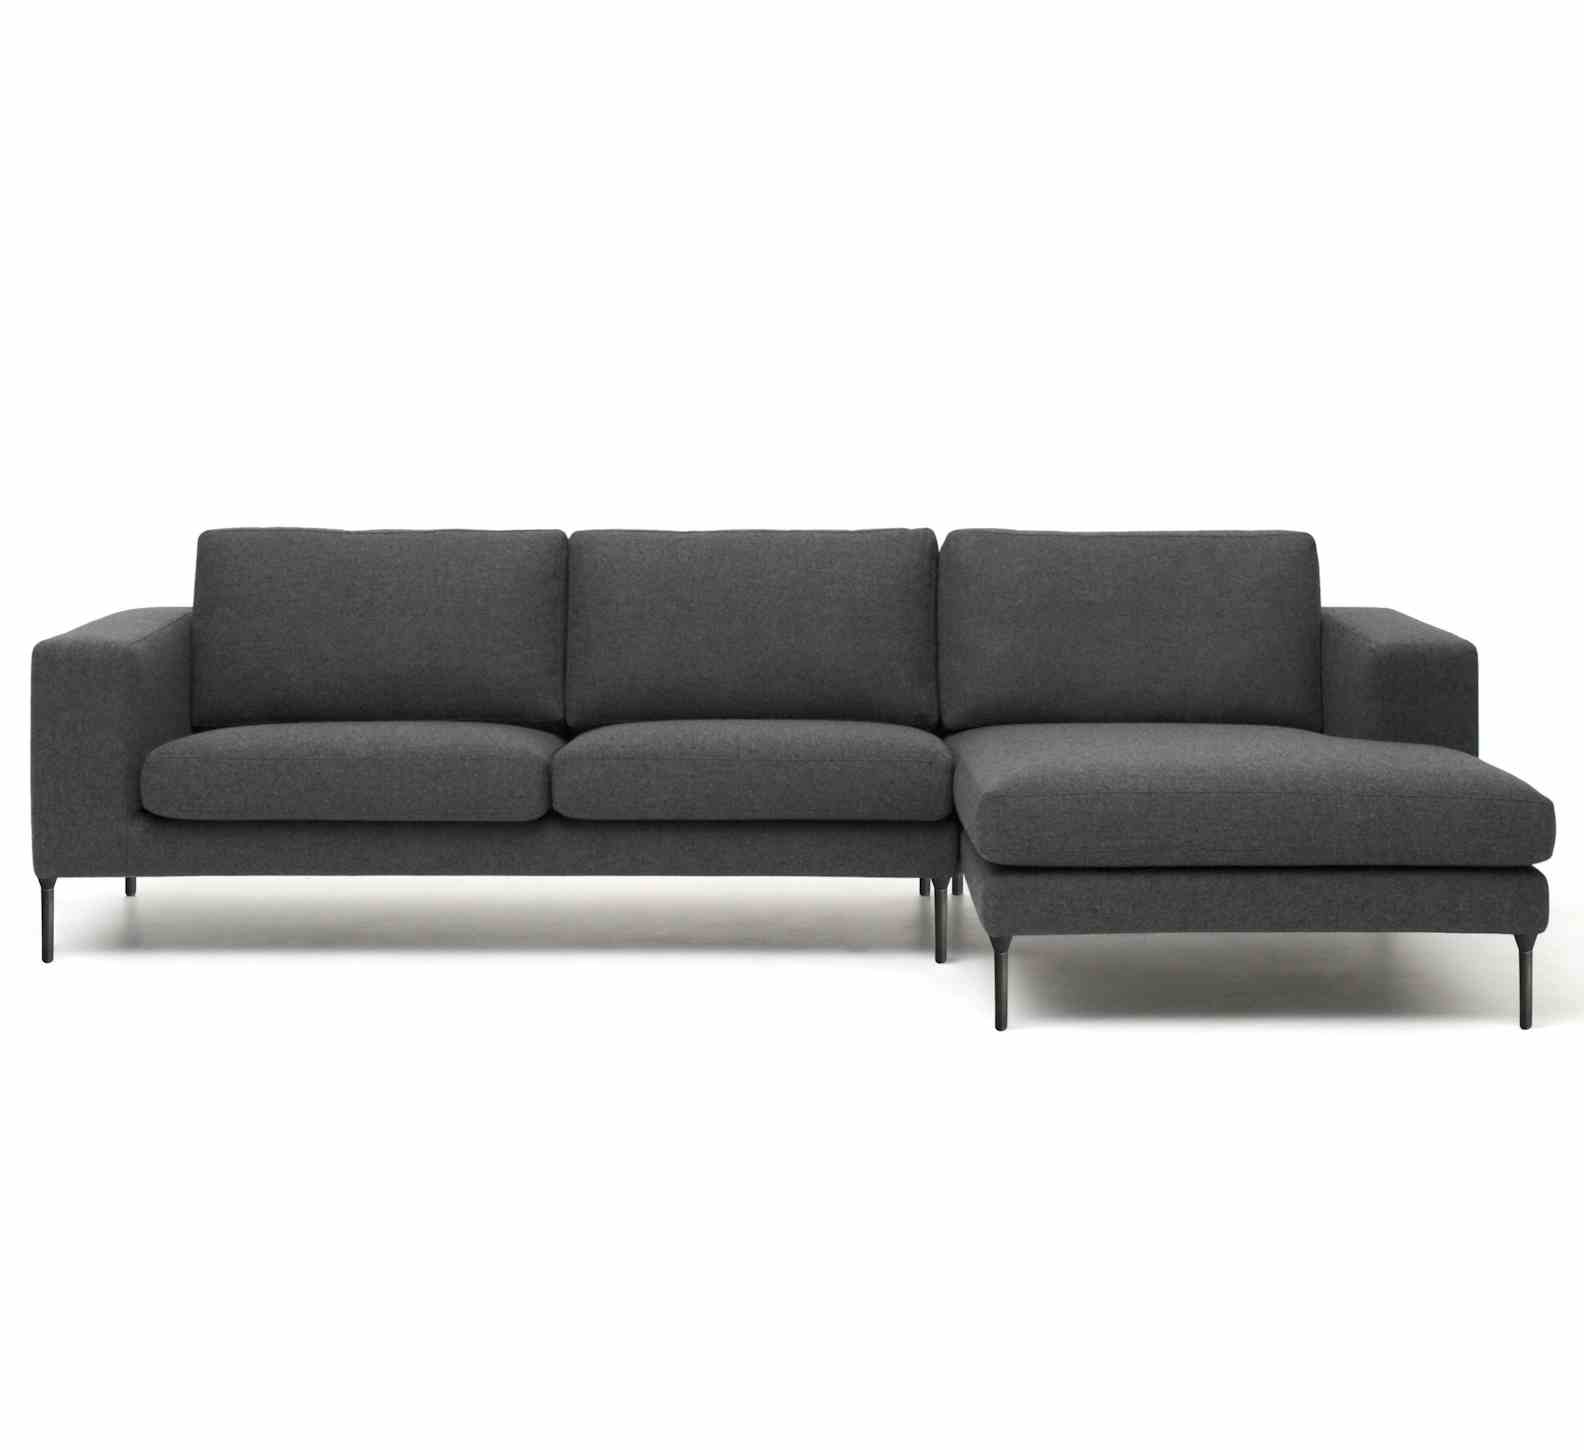 Bensen furniture neo sectional grey haute living